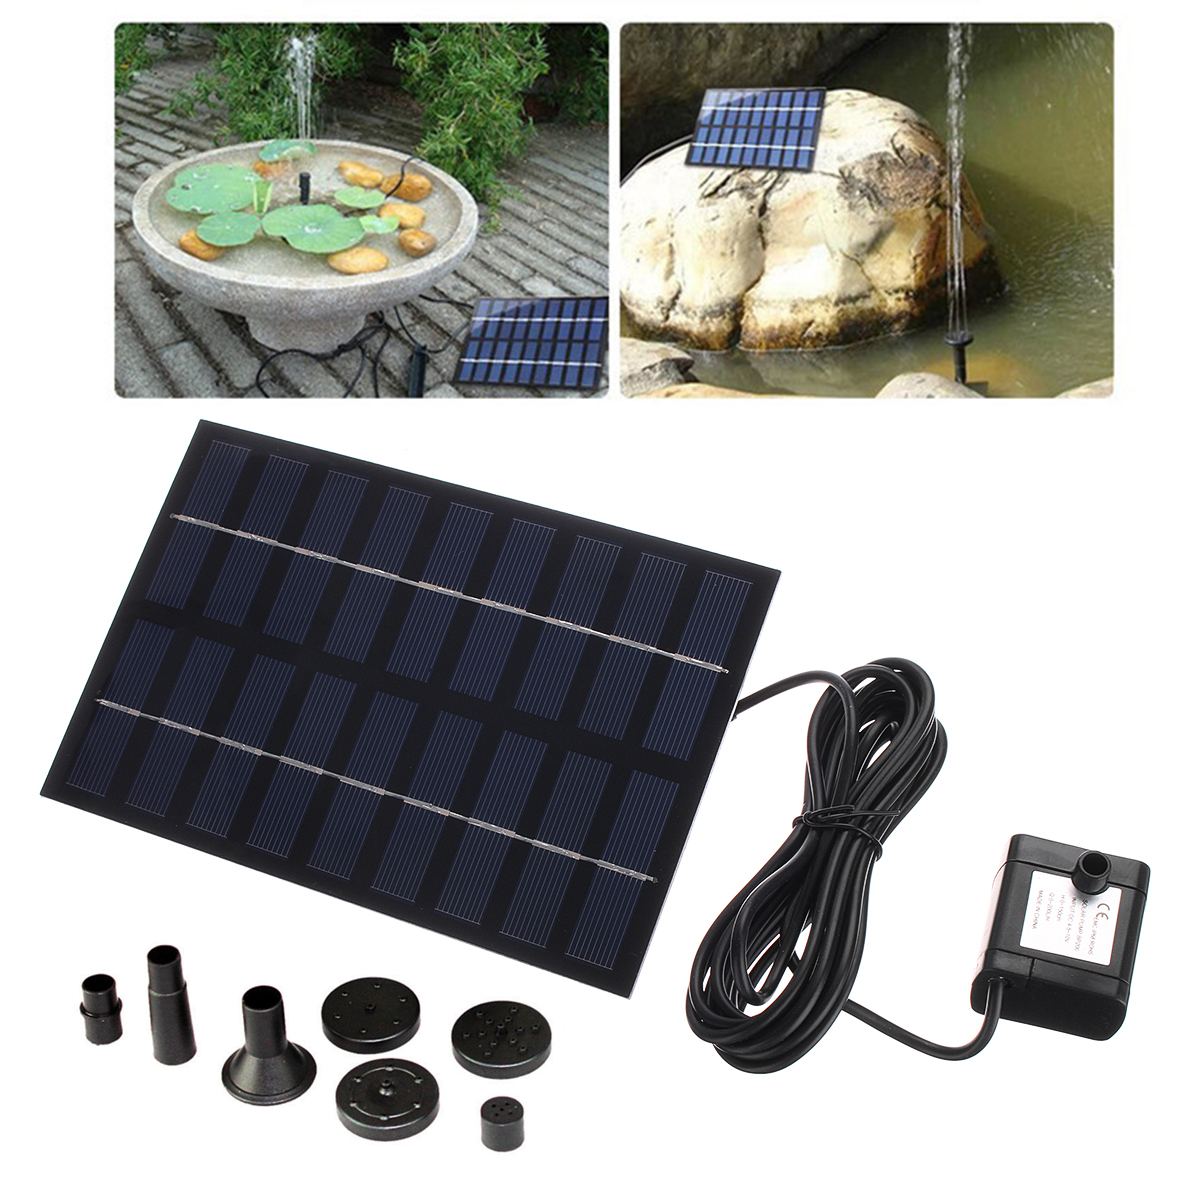 Solar-Pump-Solar-Power-Water-Pump-Panel-Kit-Fountain-Pond-Pool-Water-Garden-Submersible-Water-Pump-1291921-1